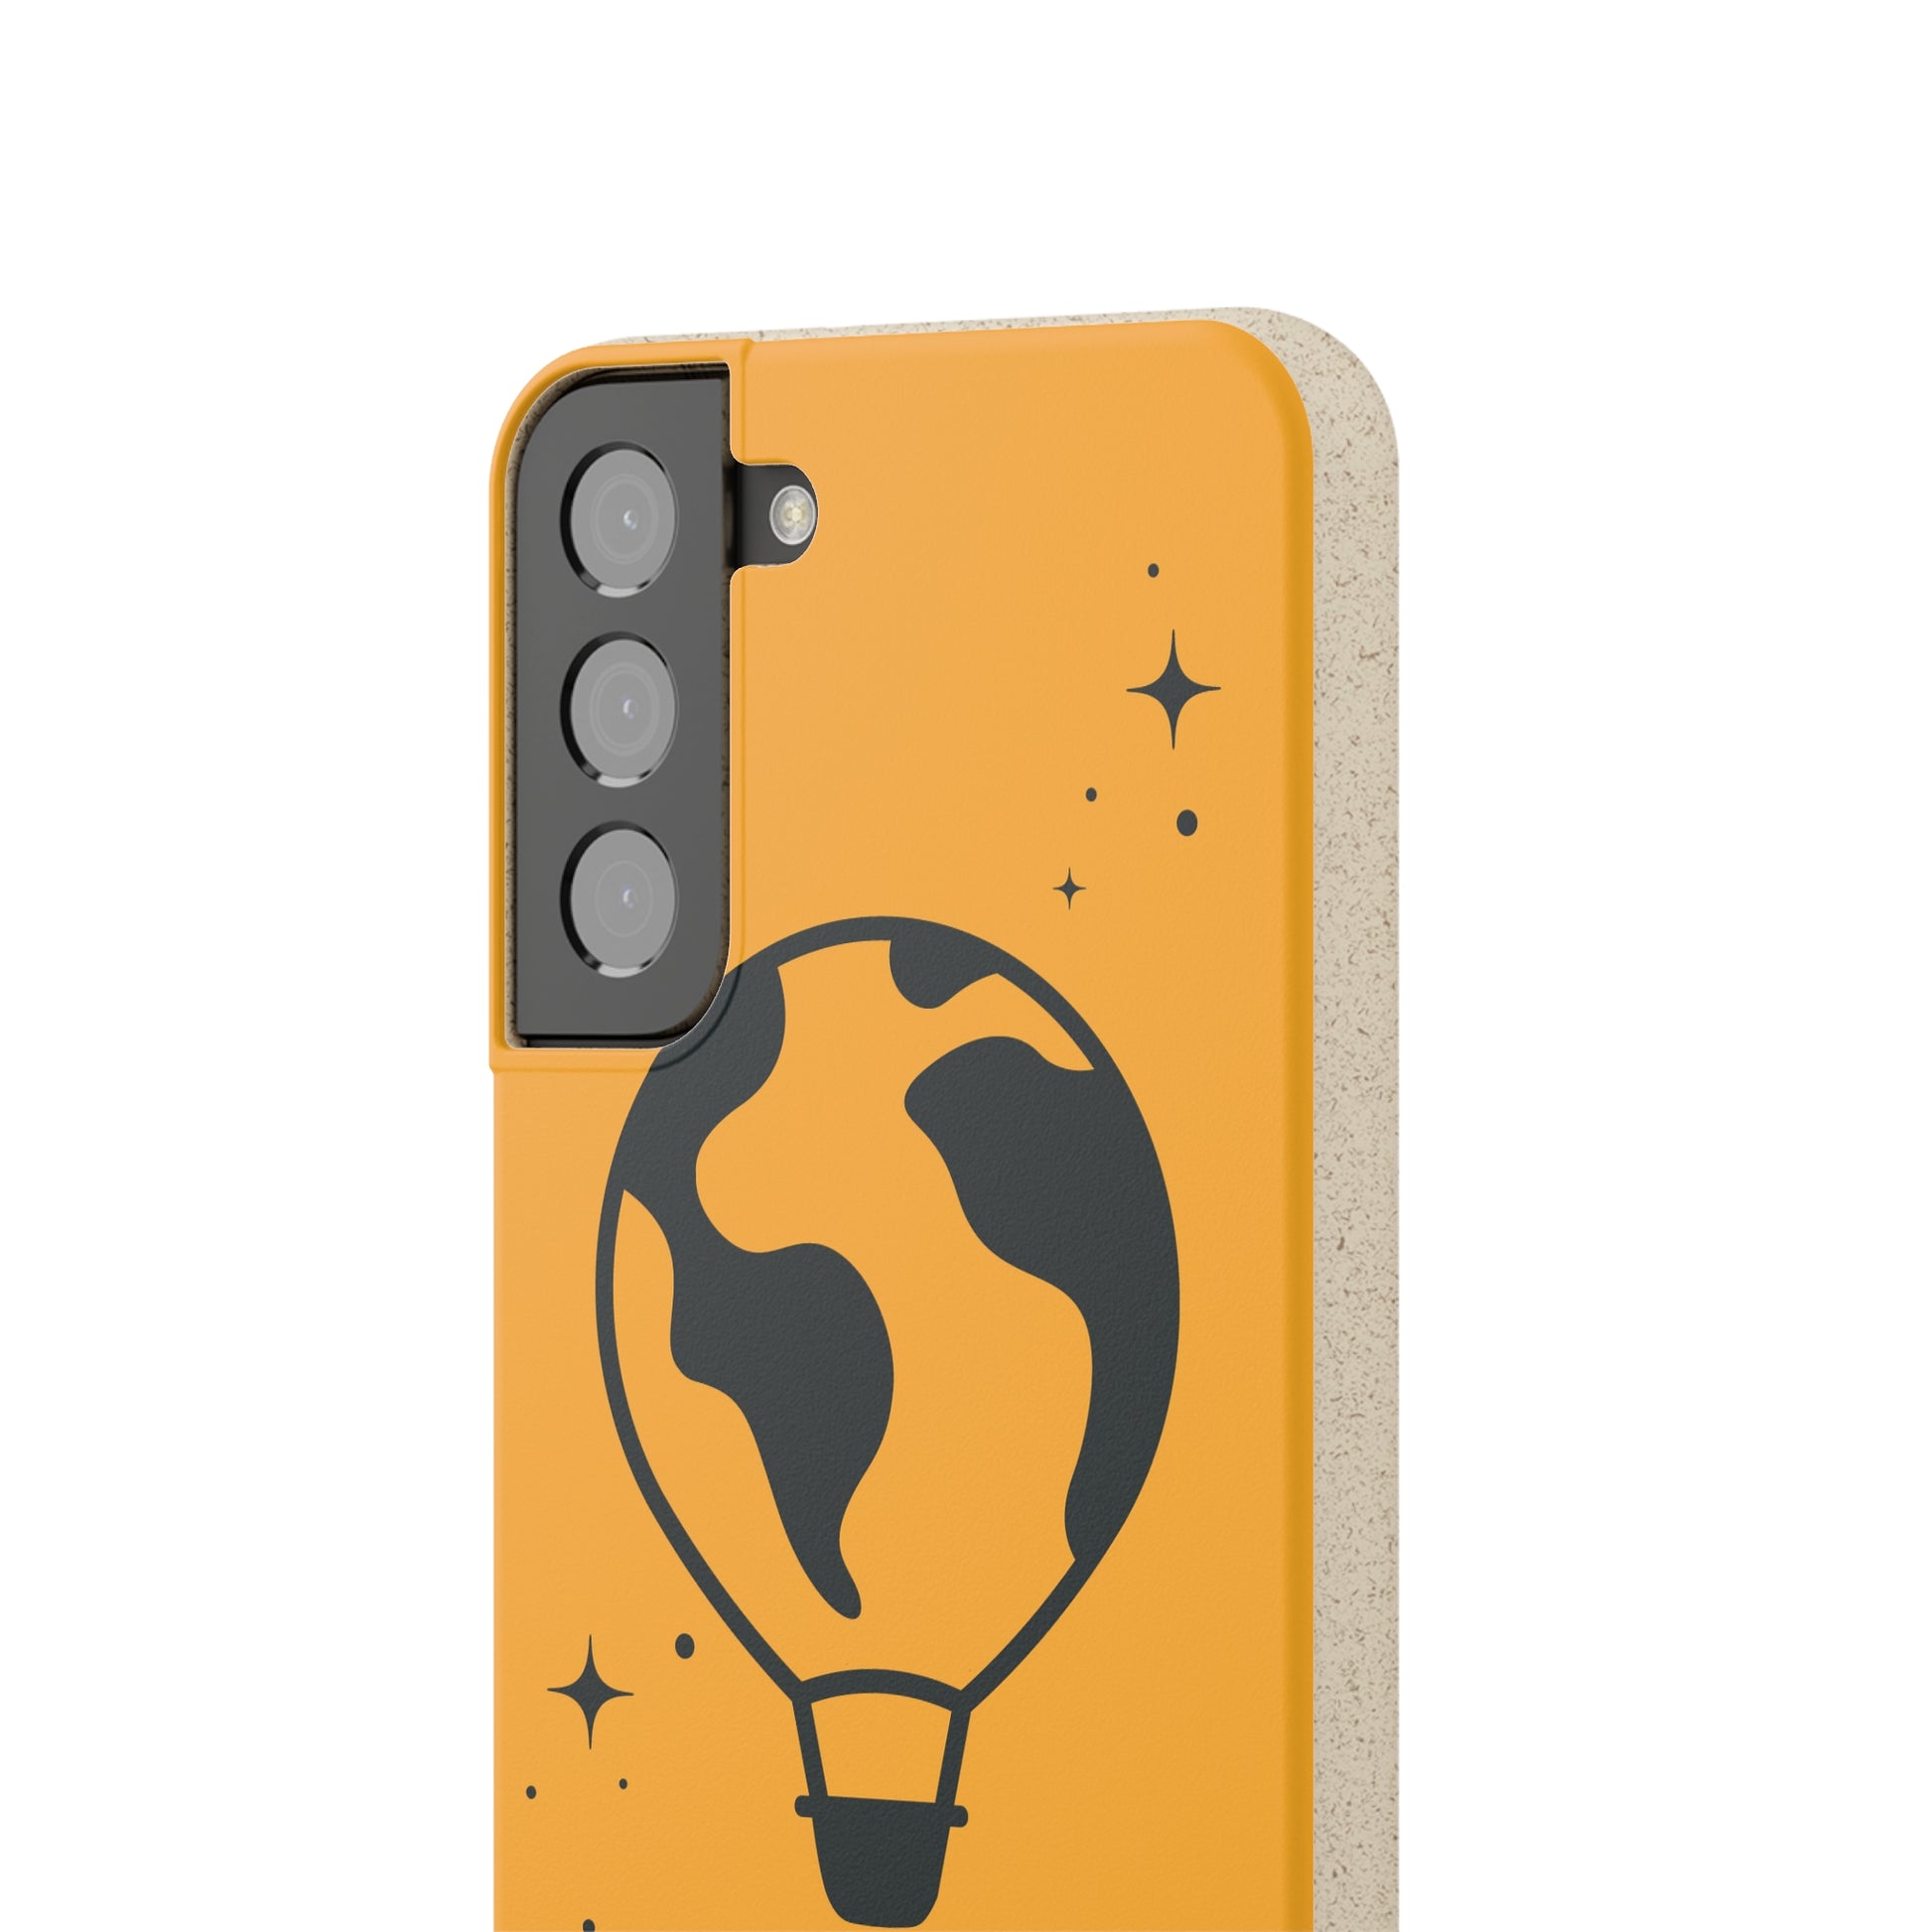 Dream High (Orange) Phone Case Printify   